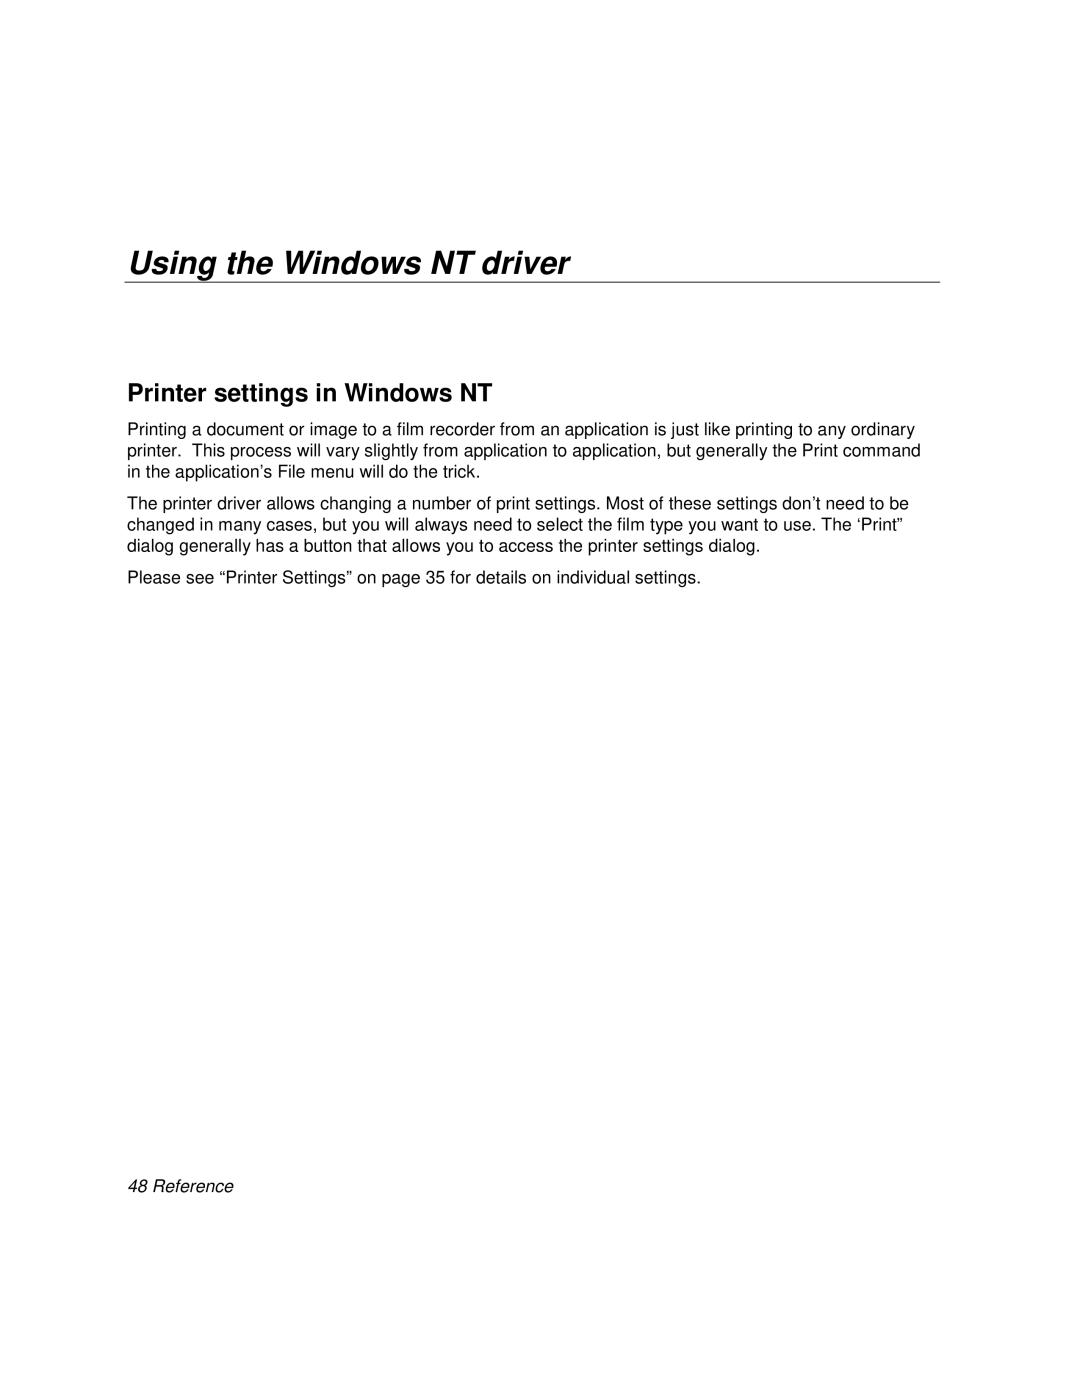 Polaroid BLL Generator manual Using the Windows NT driver, Printer settings in Windows NT, Reference 